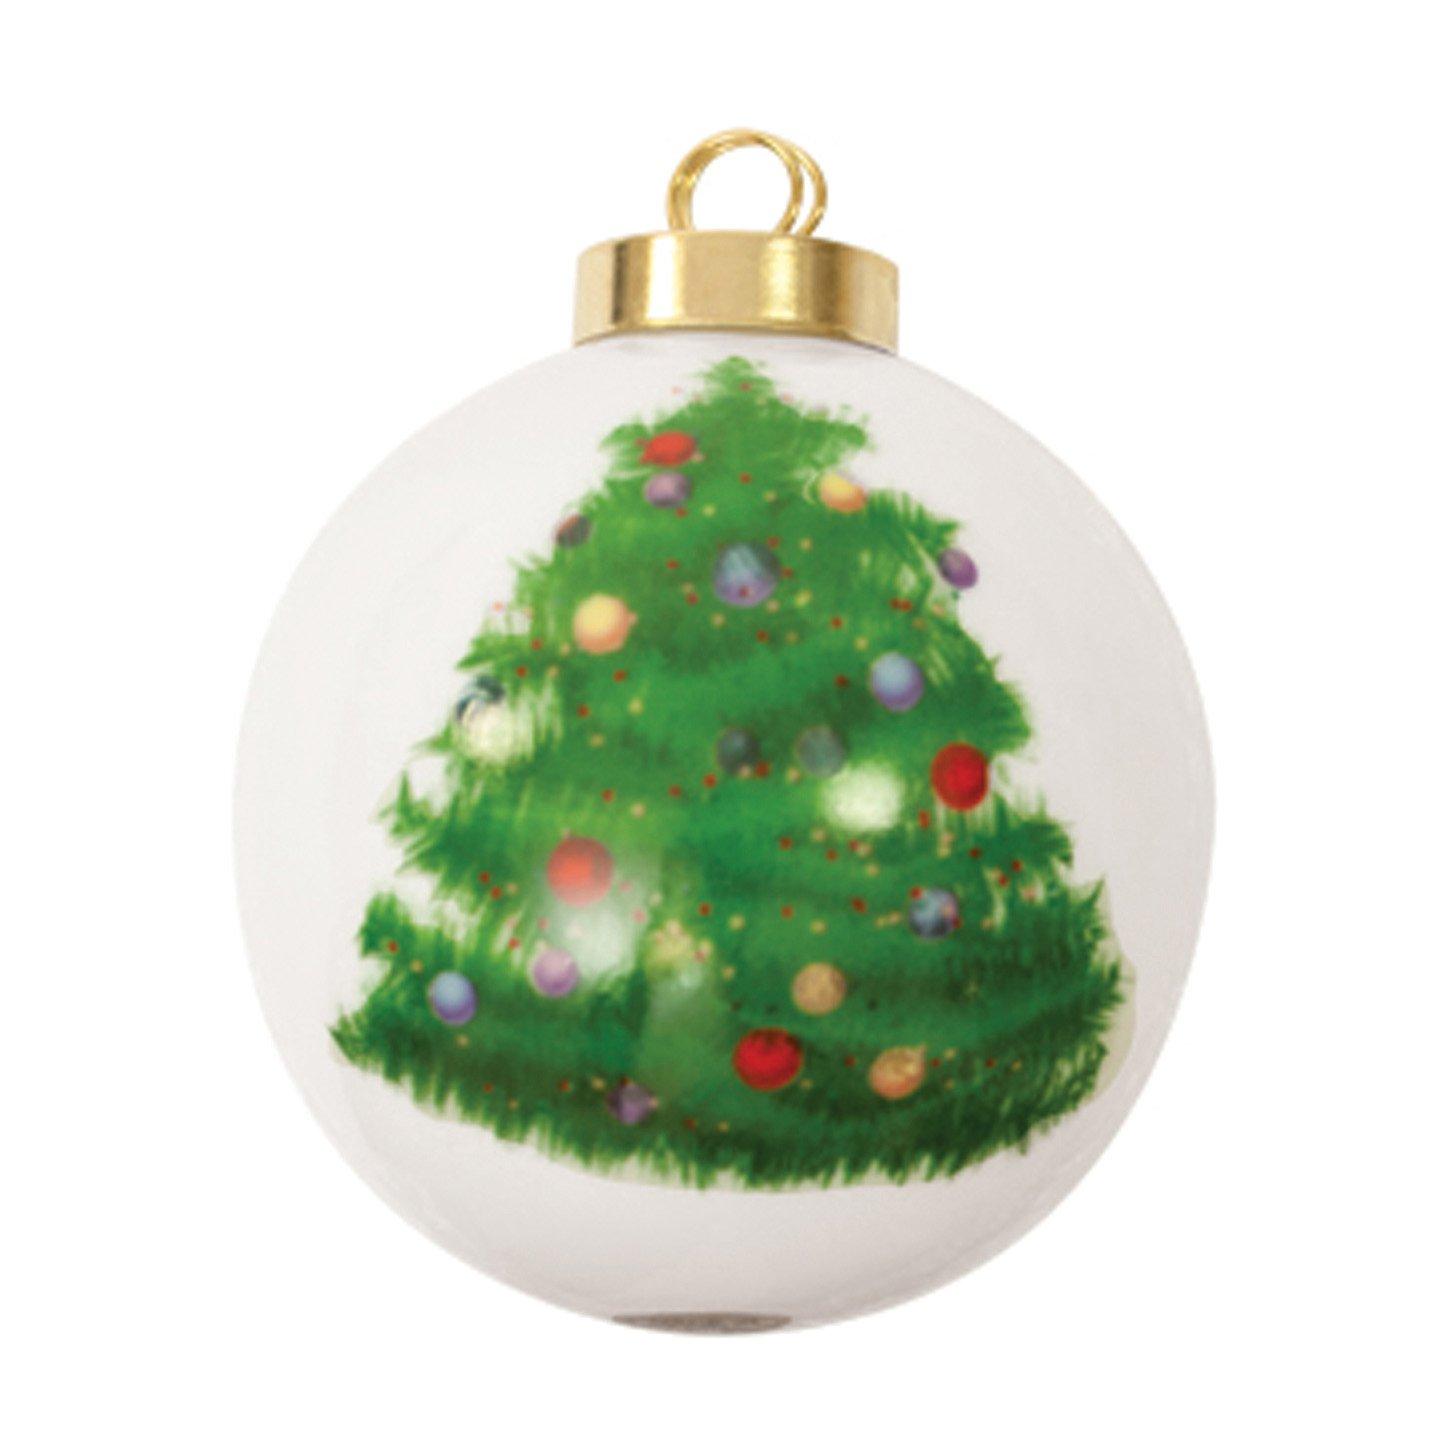 3.5 Round Aluminum Dye Sublimation Christmas Ornament Blanks